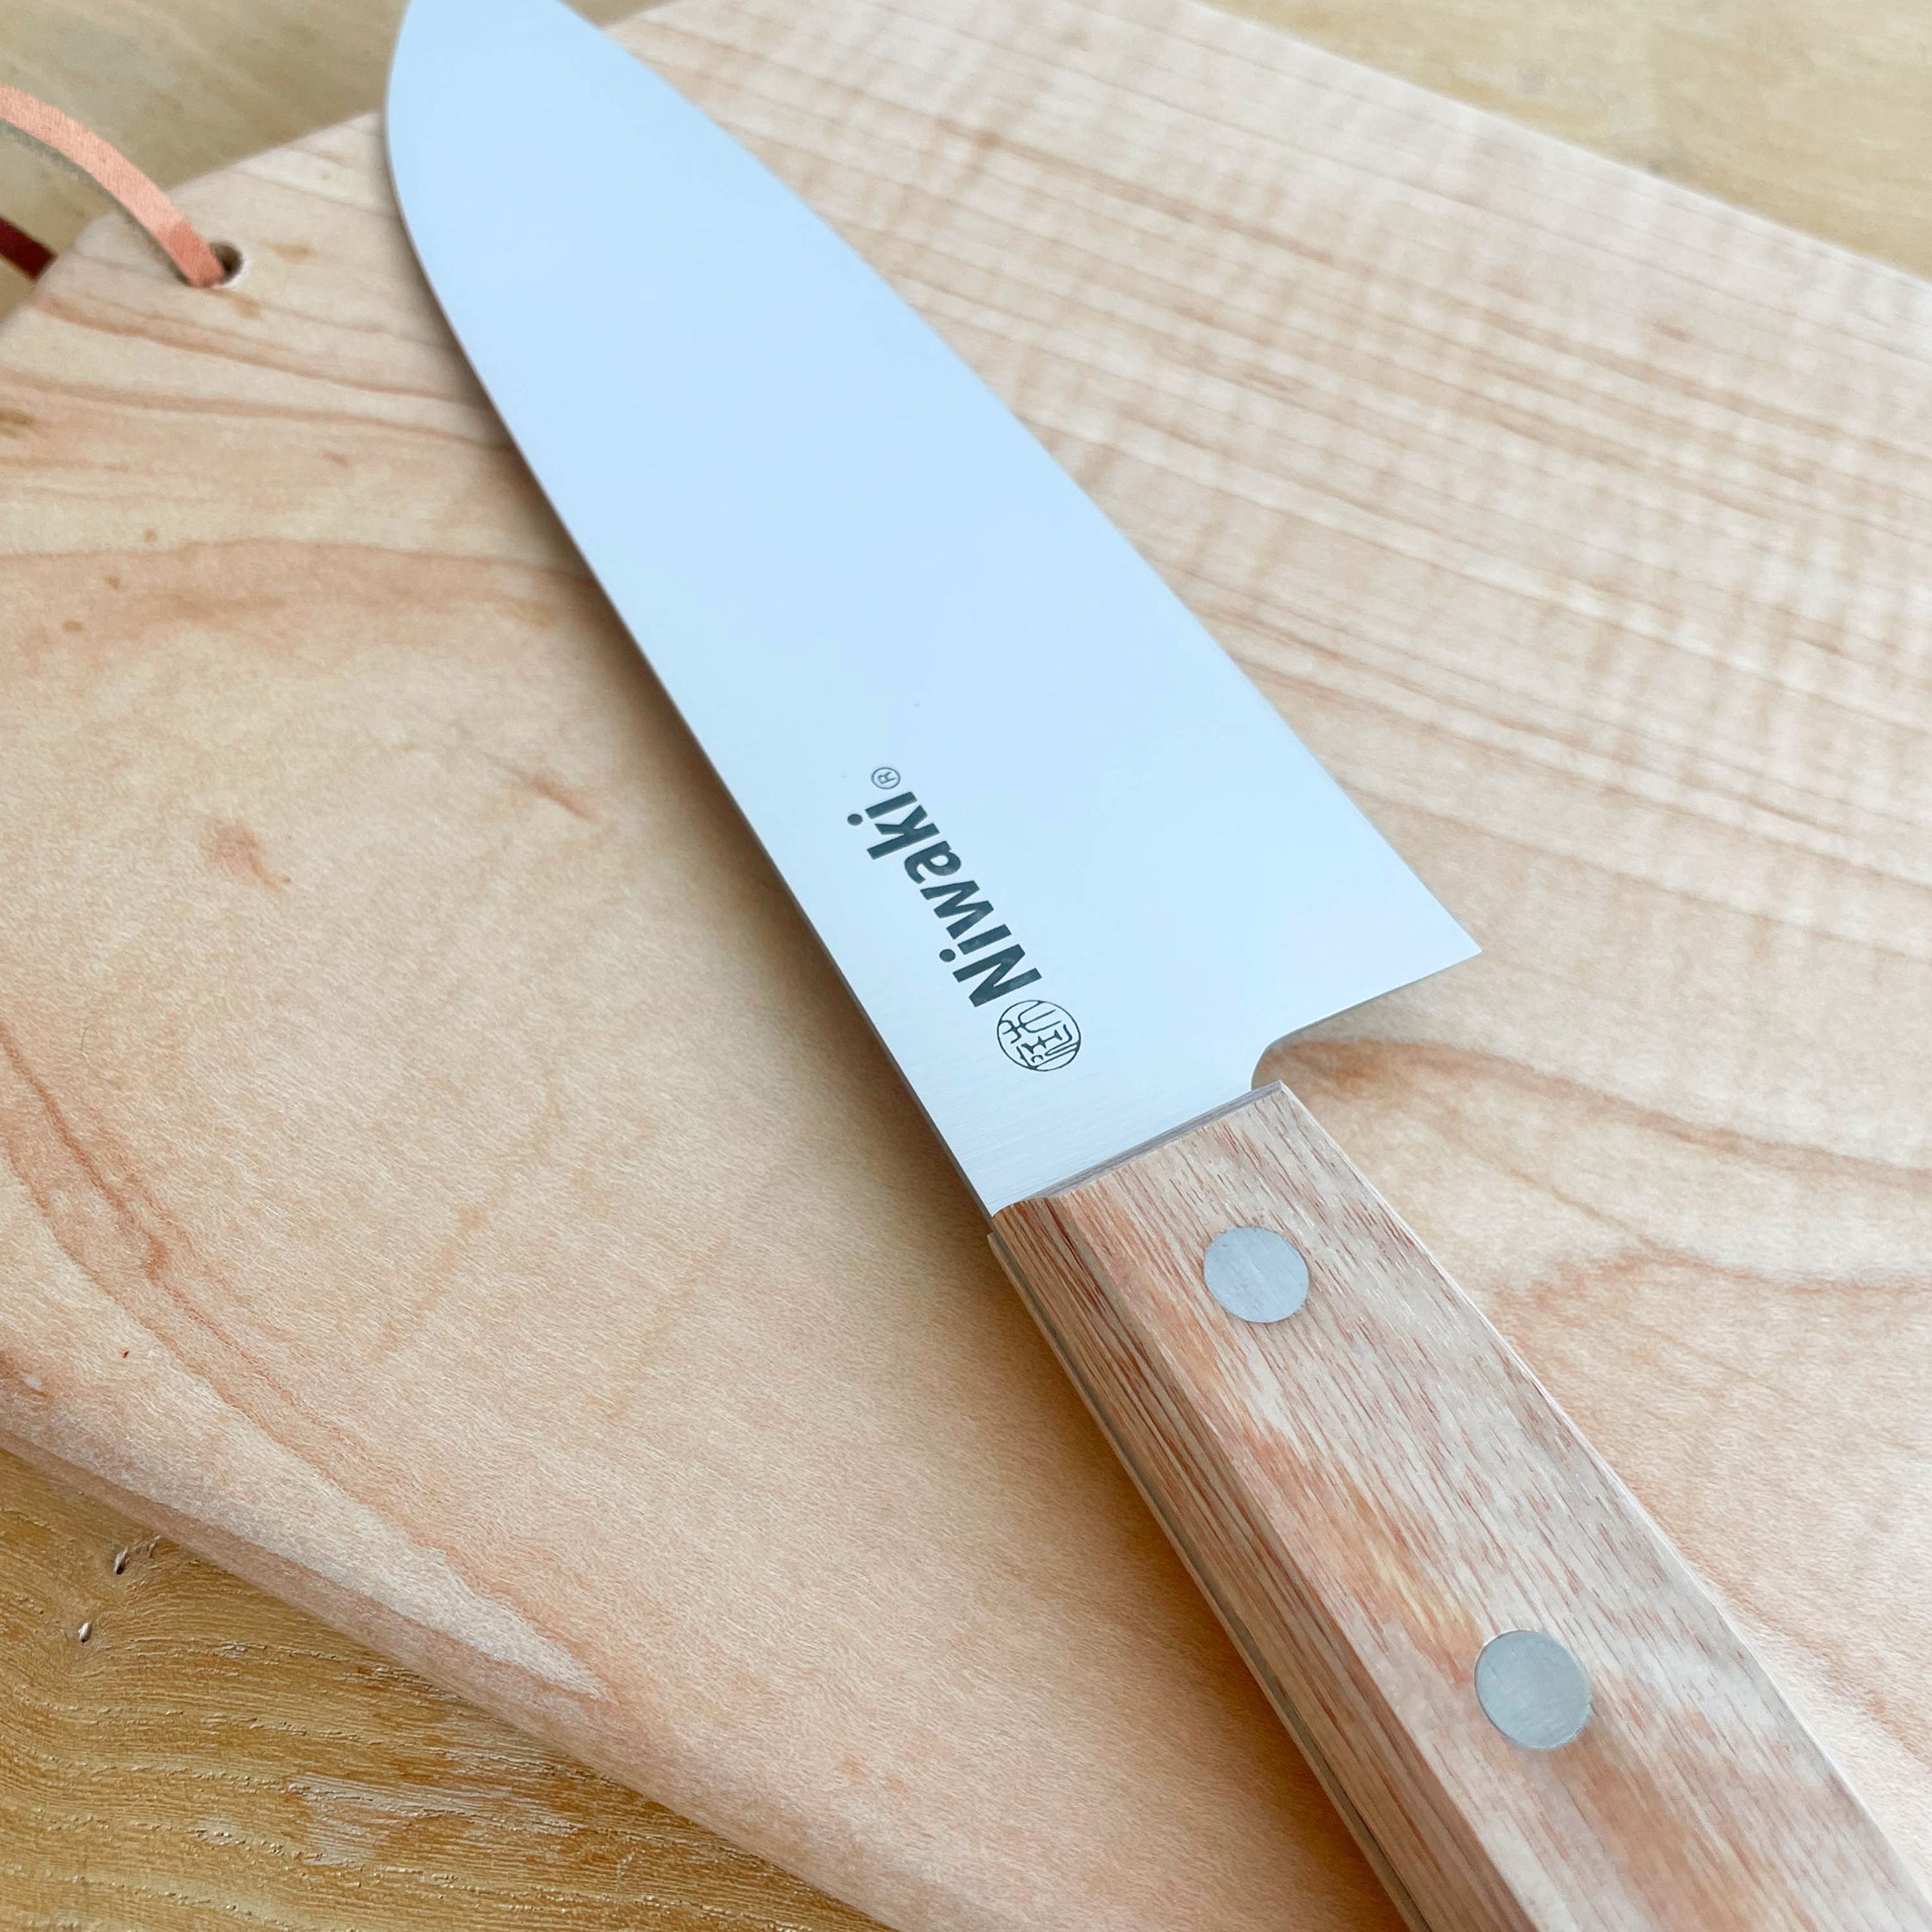 Japanese Chefs Knife by Niwaki